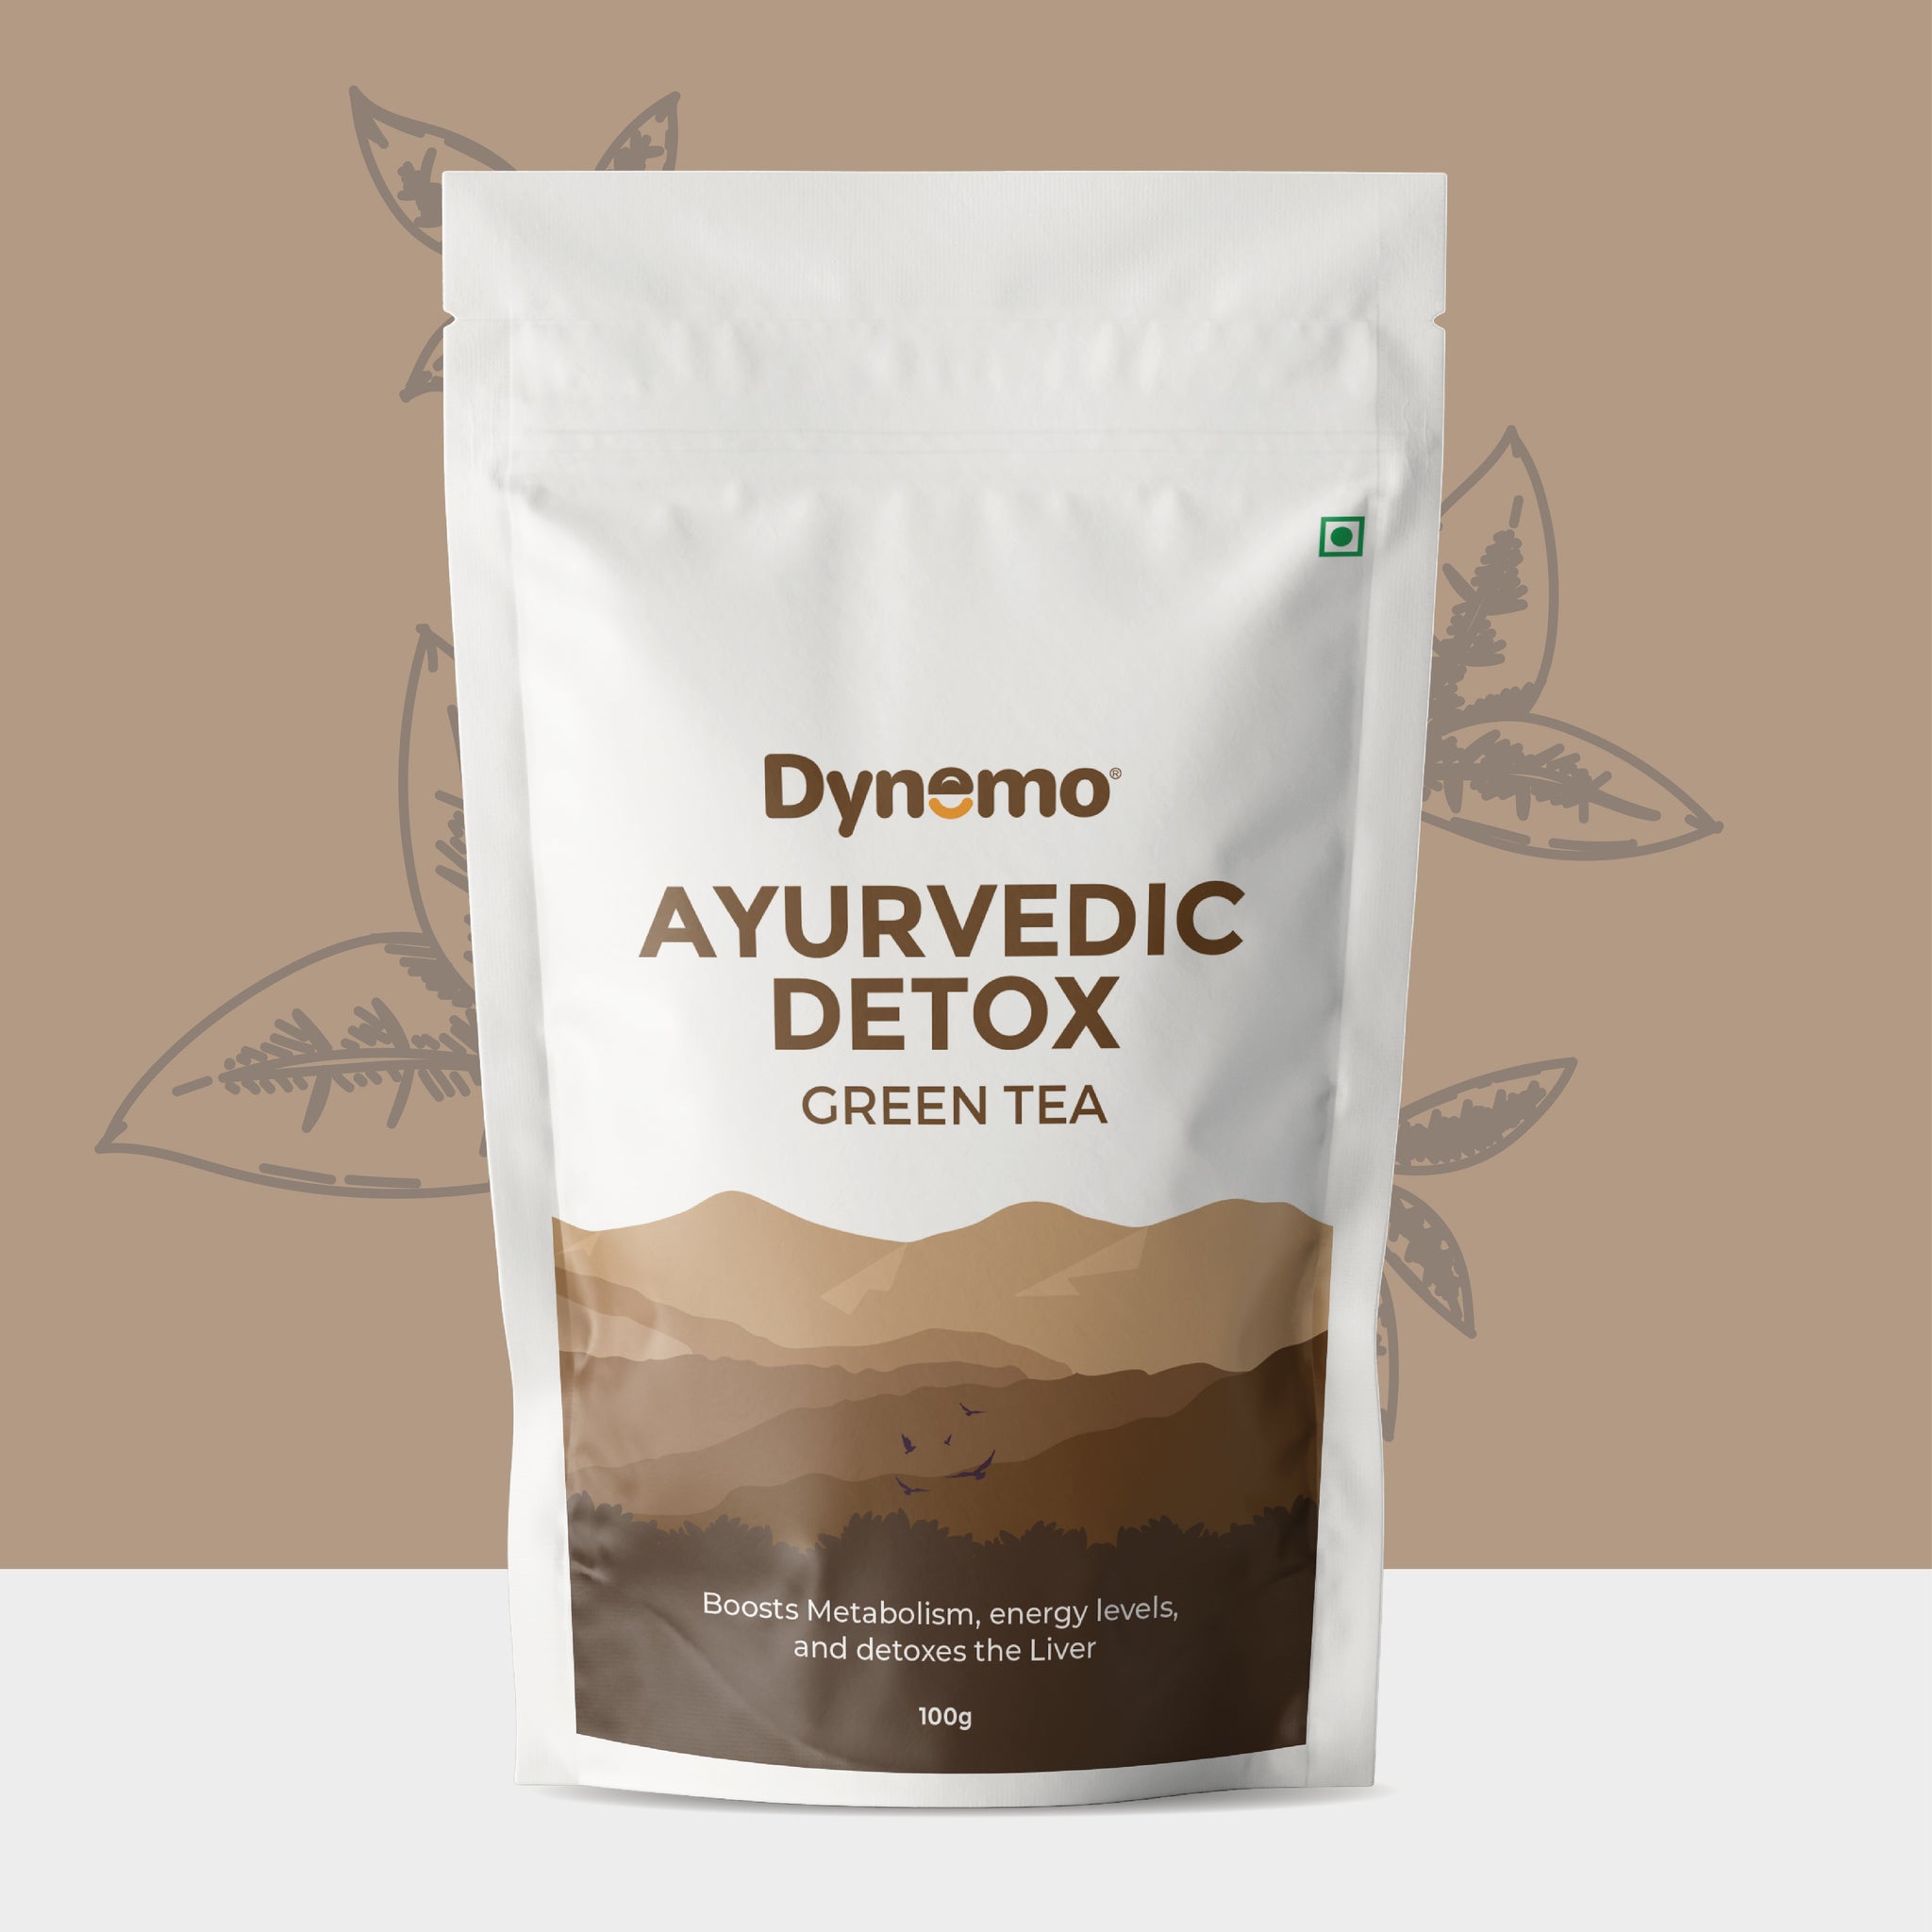 Dynemo Ayurvedic Detox Green Tea